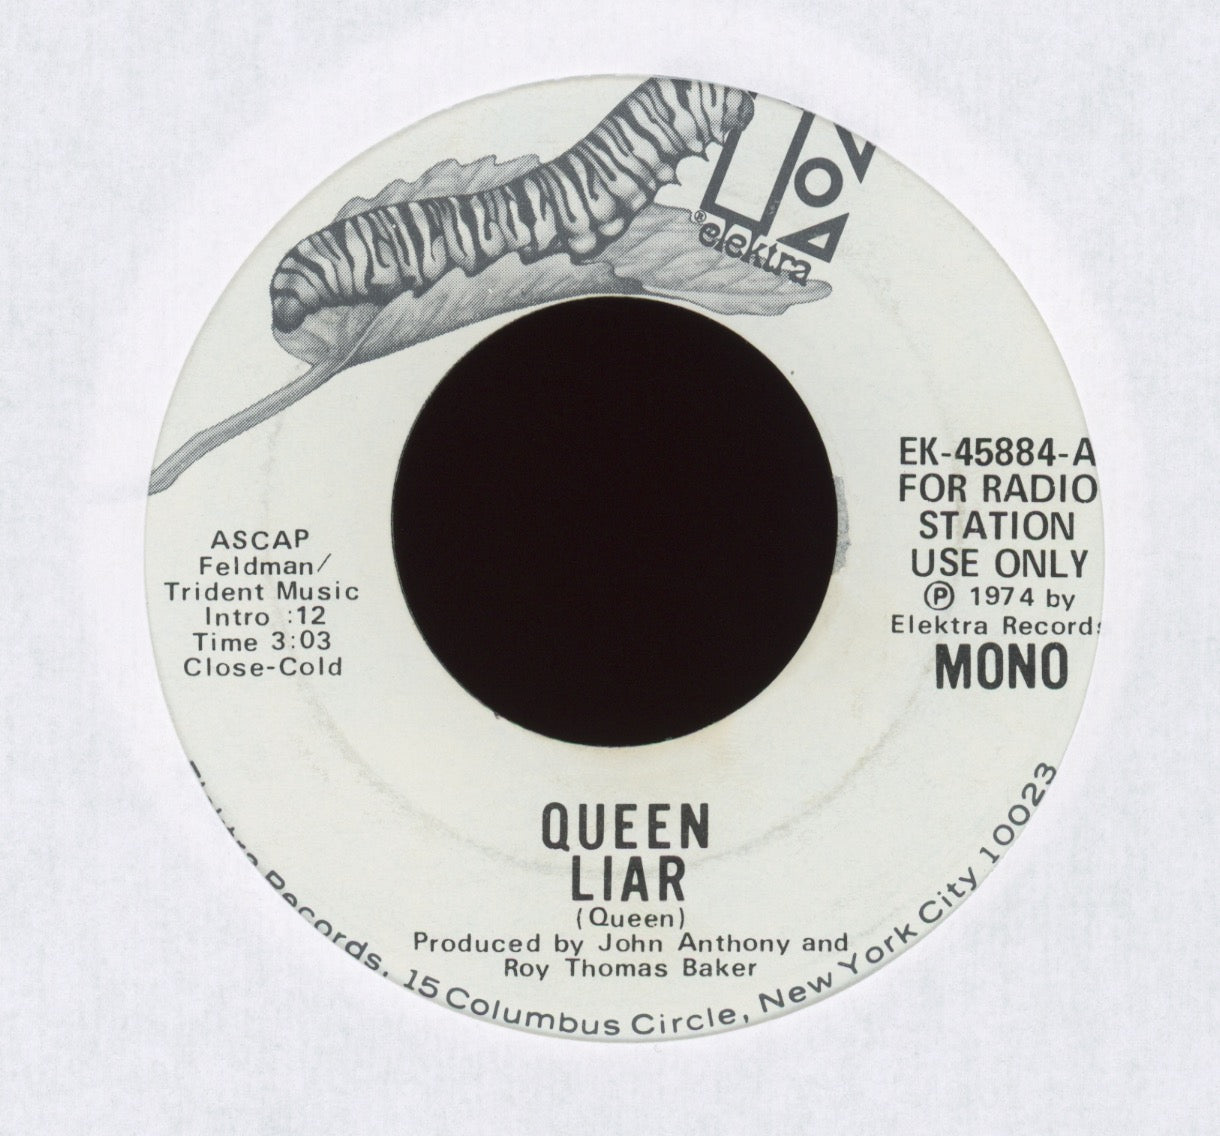 Queen - Liar on Elektra Promo